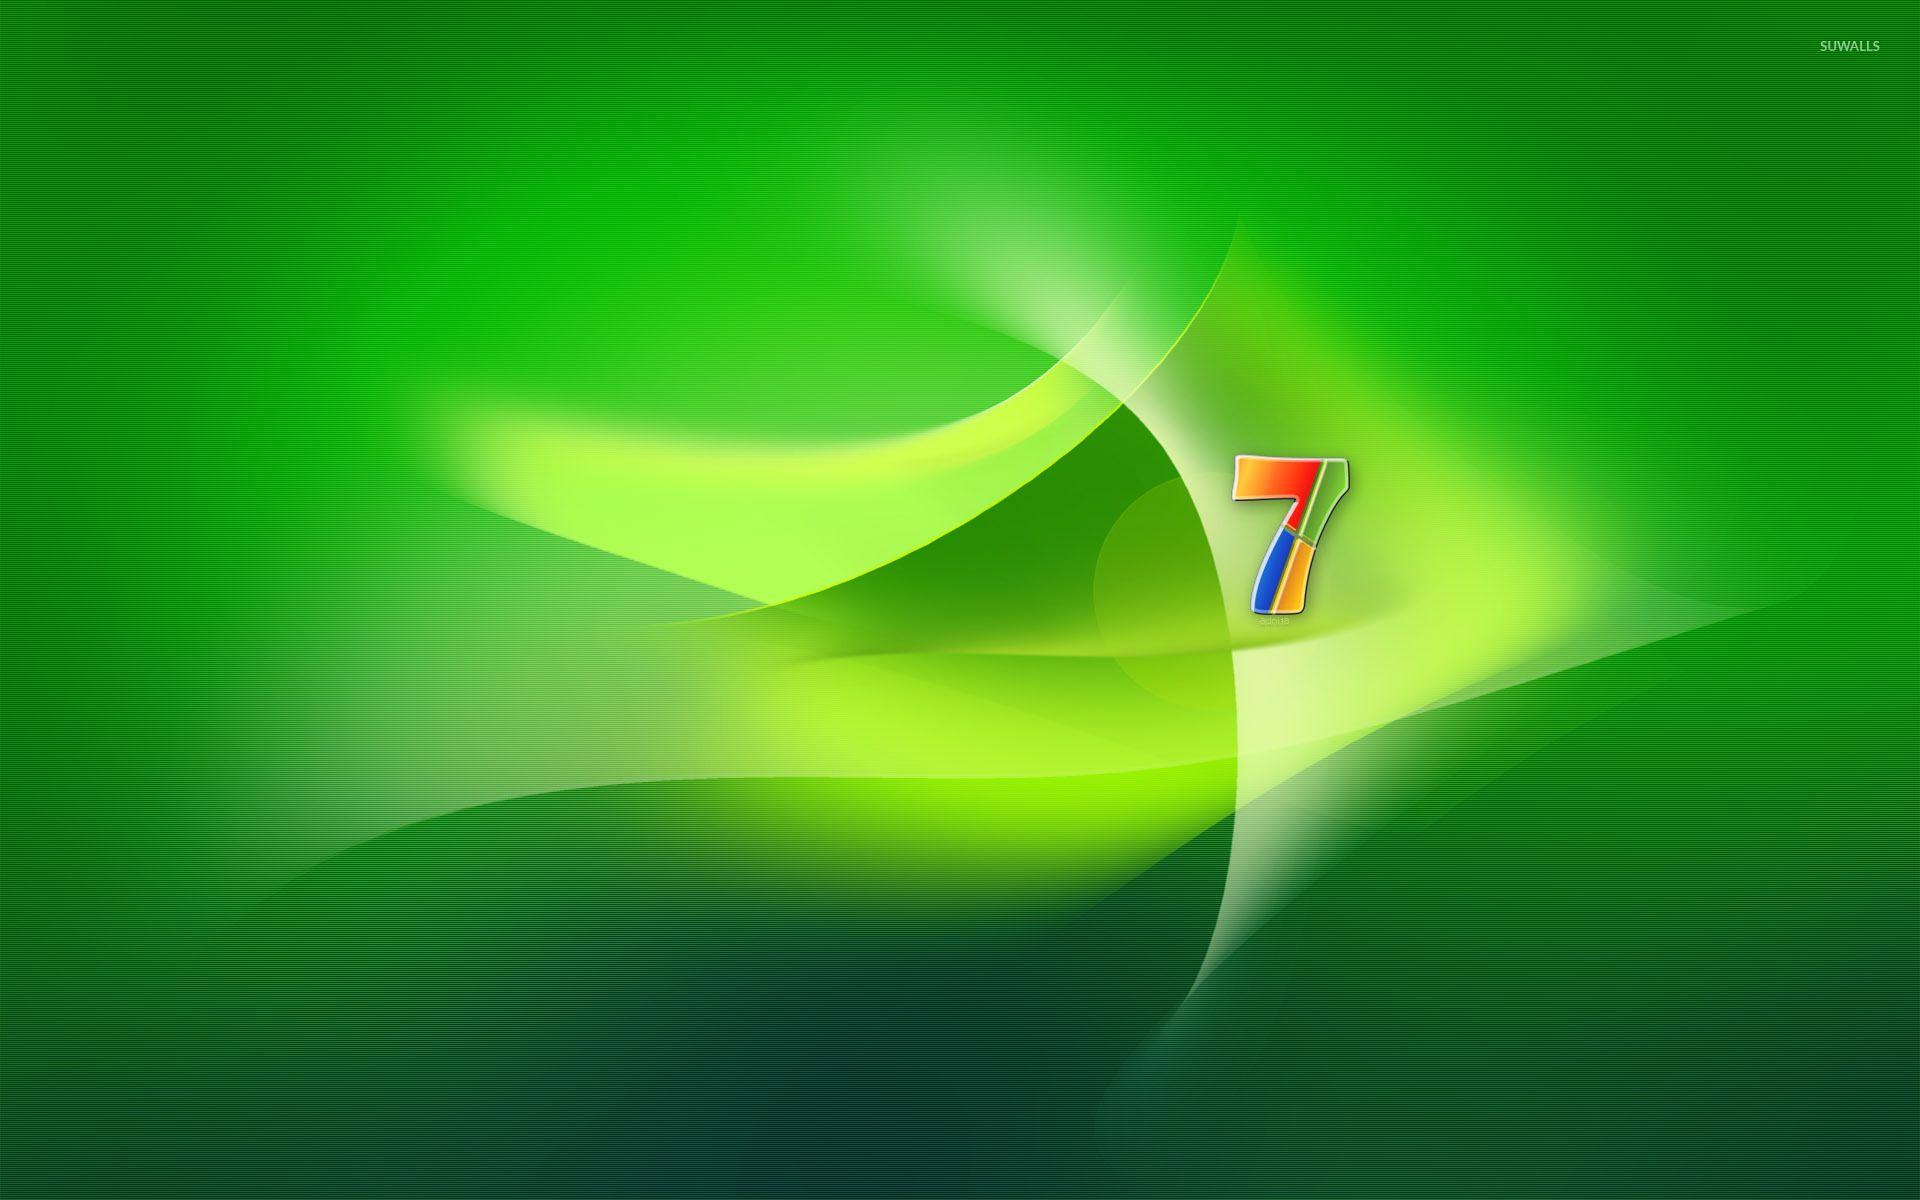 Green Windows 7 logo wallpaper wallpaper